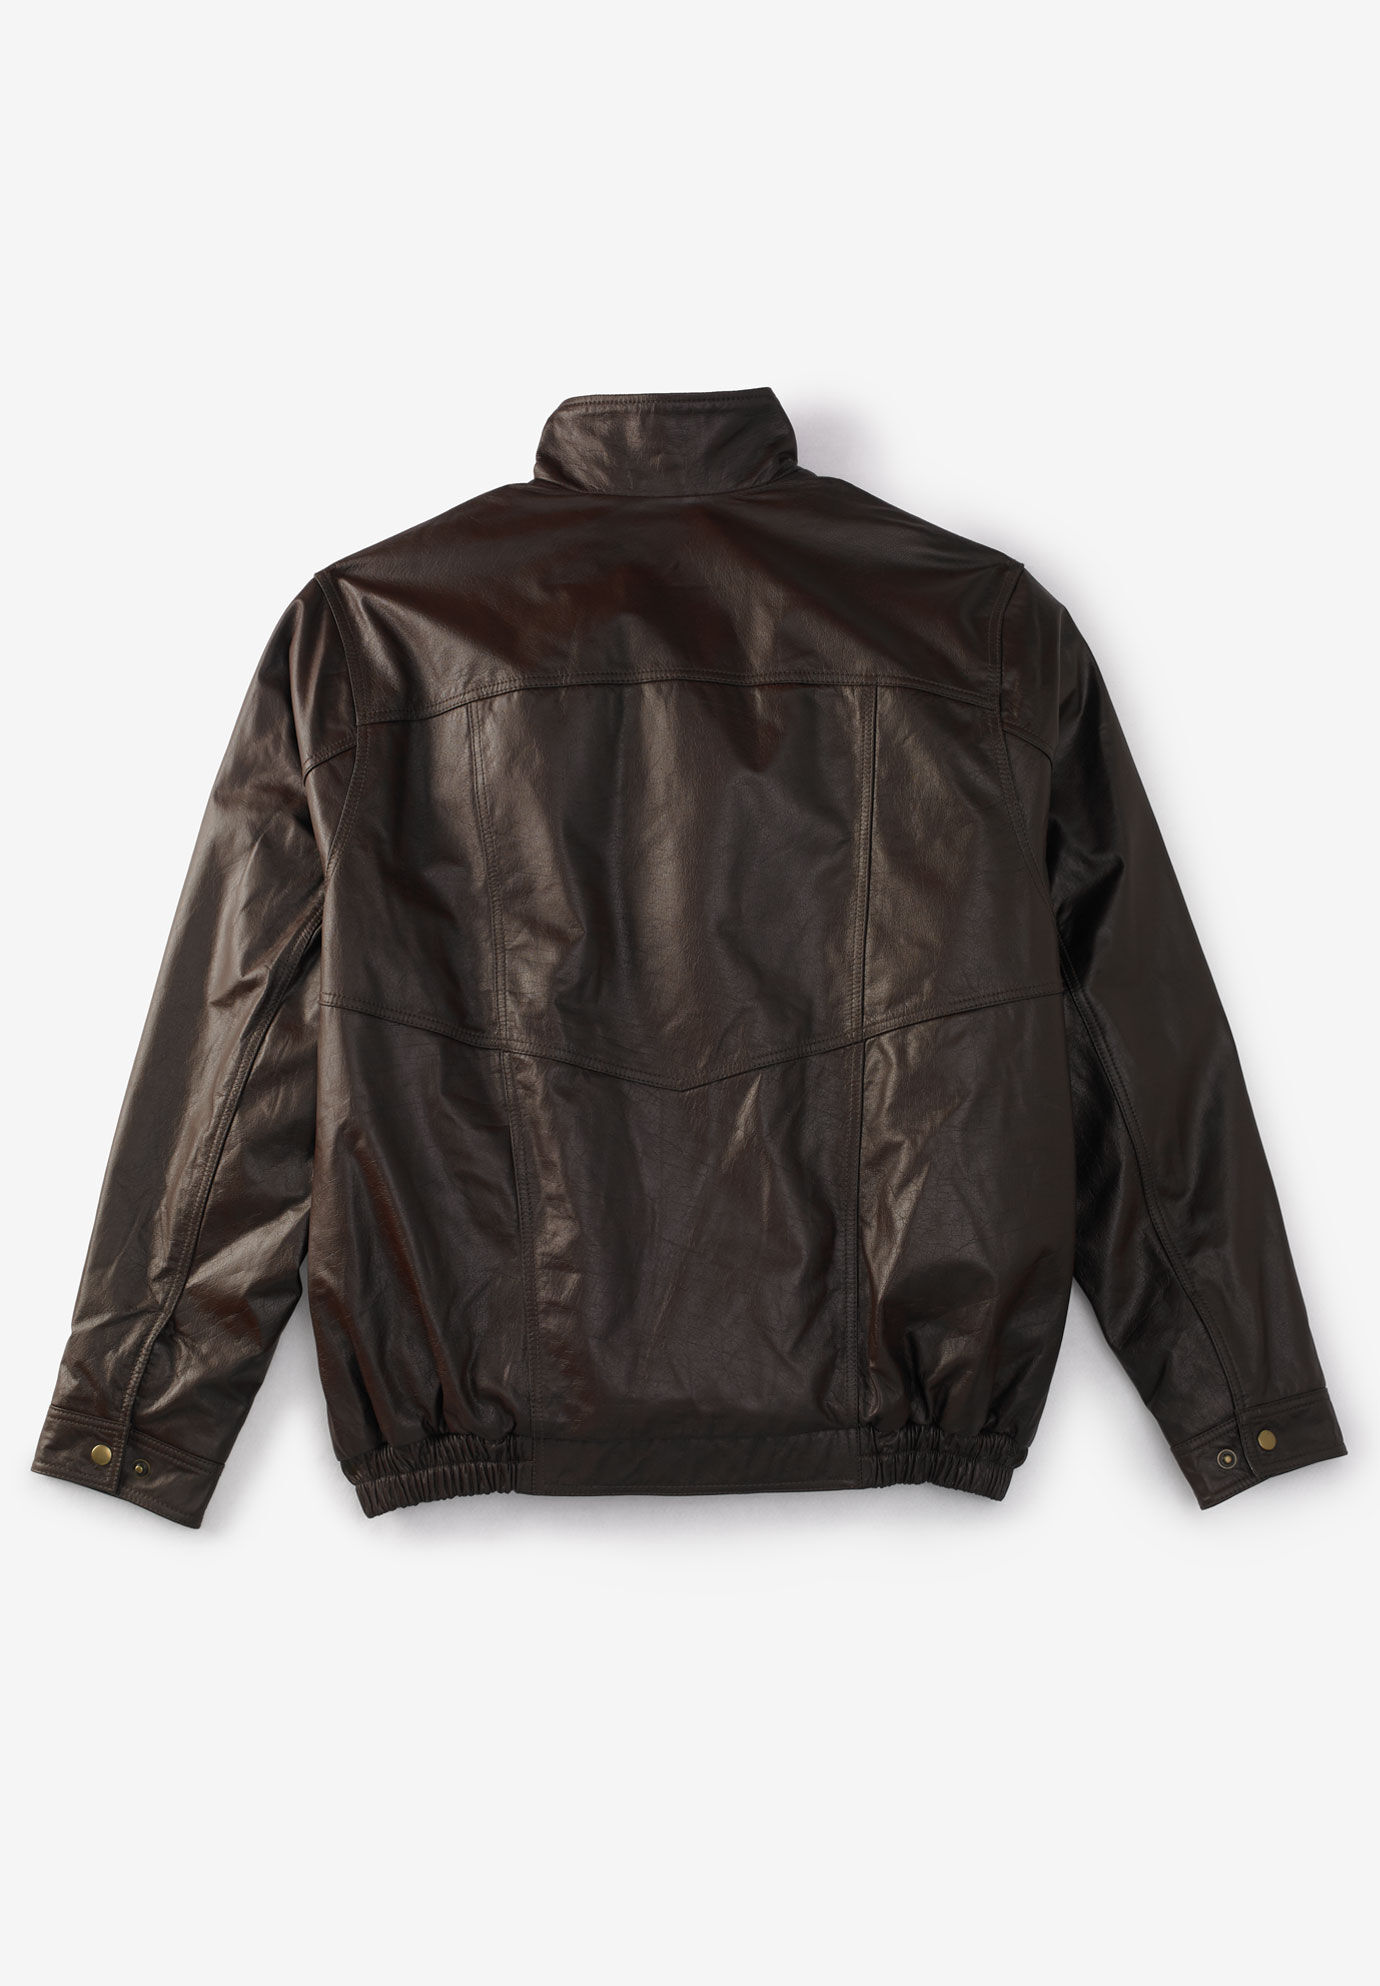 KingSize Men's Big & Tall Microsuede Bomber Jacket Leather Jacket